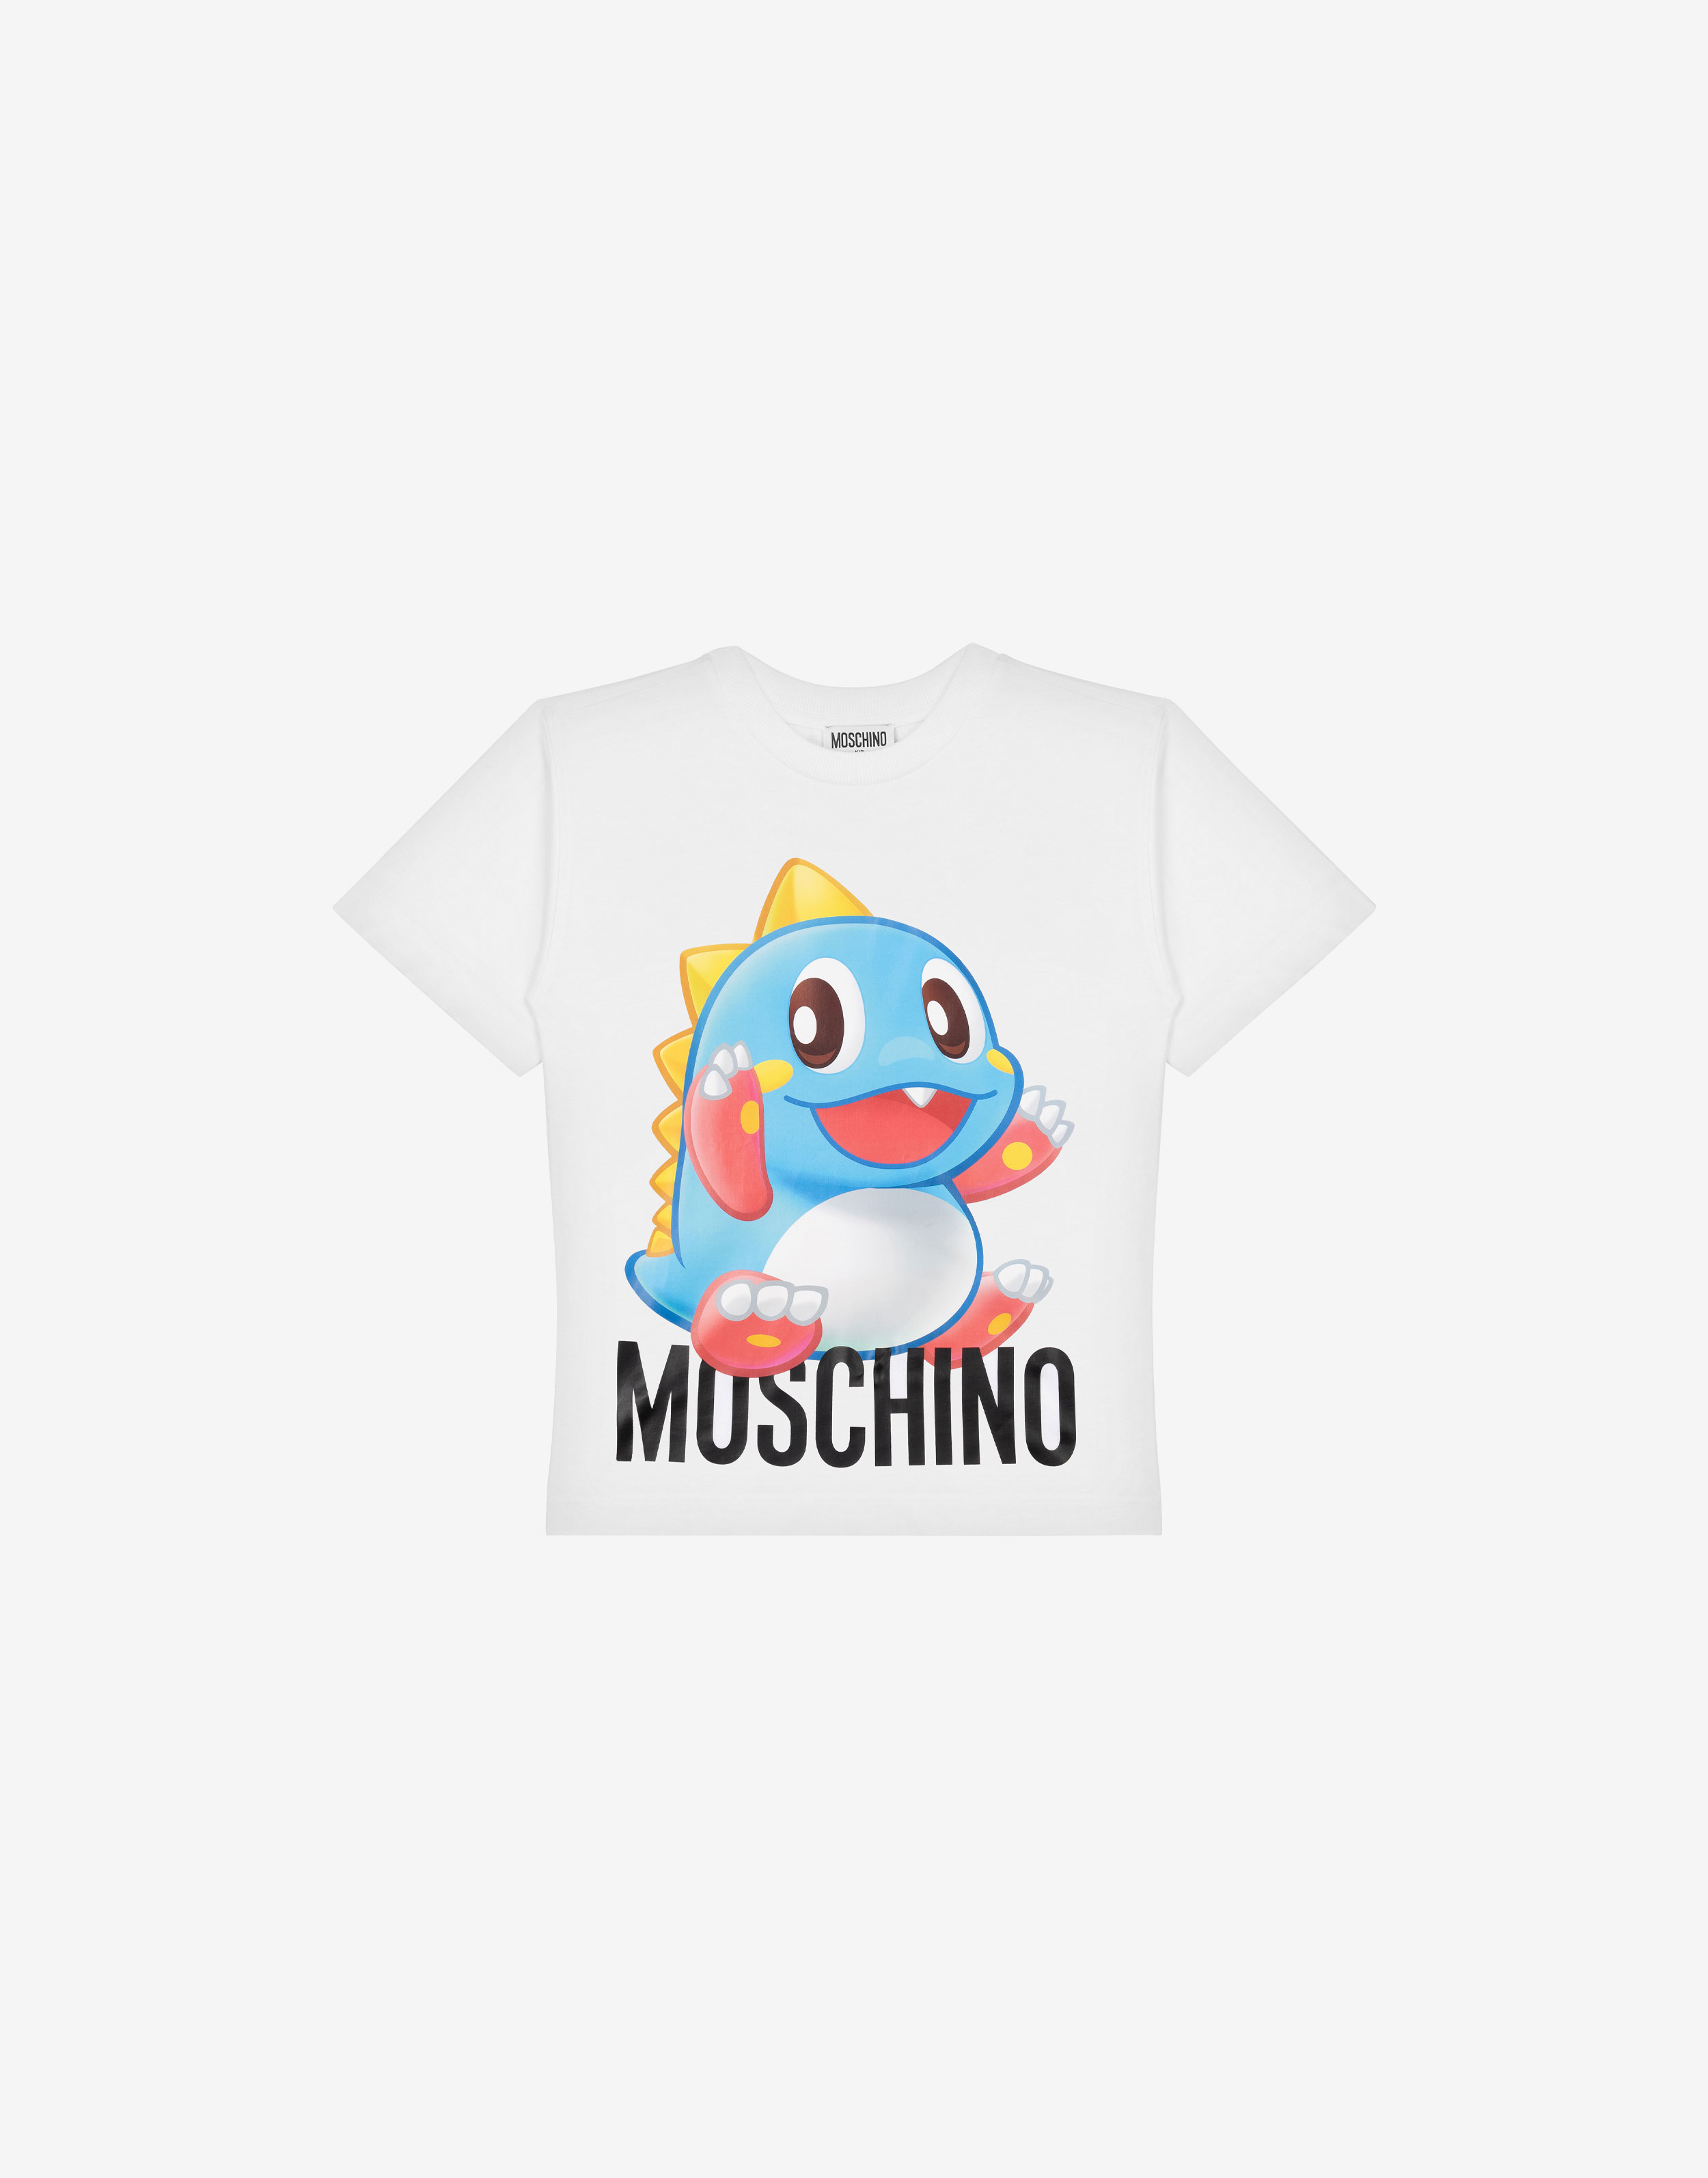 Moschino Clothing Women  Moschino Official Store